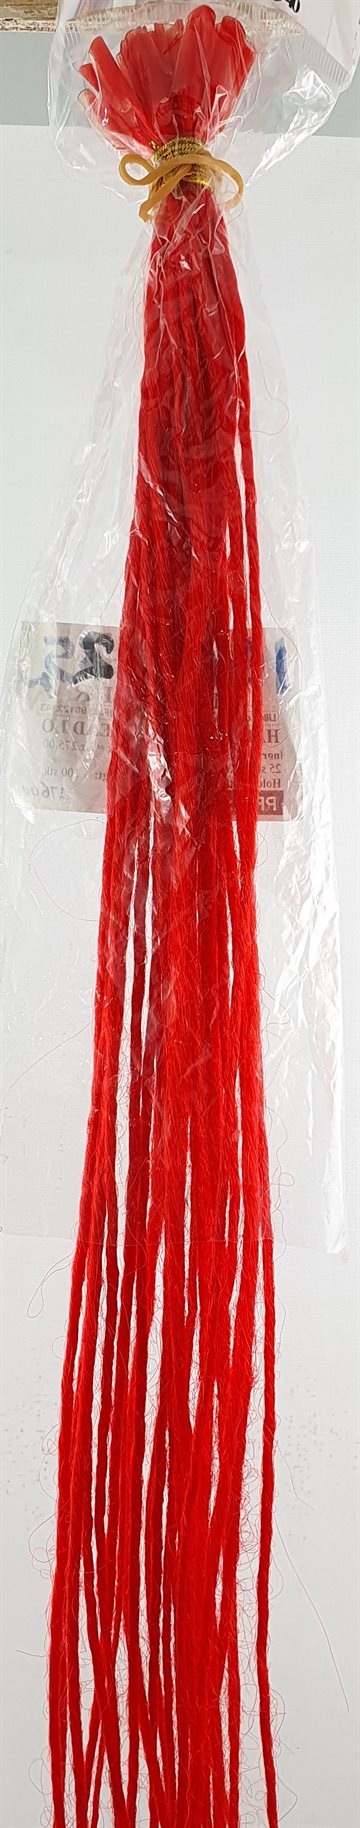 U-Tips-Dread Lock Rød farve-25stk. Syntetisk.